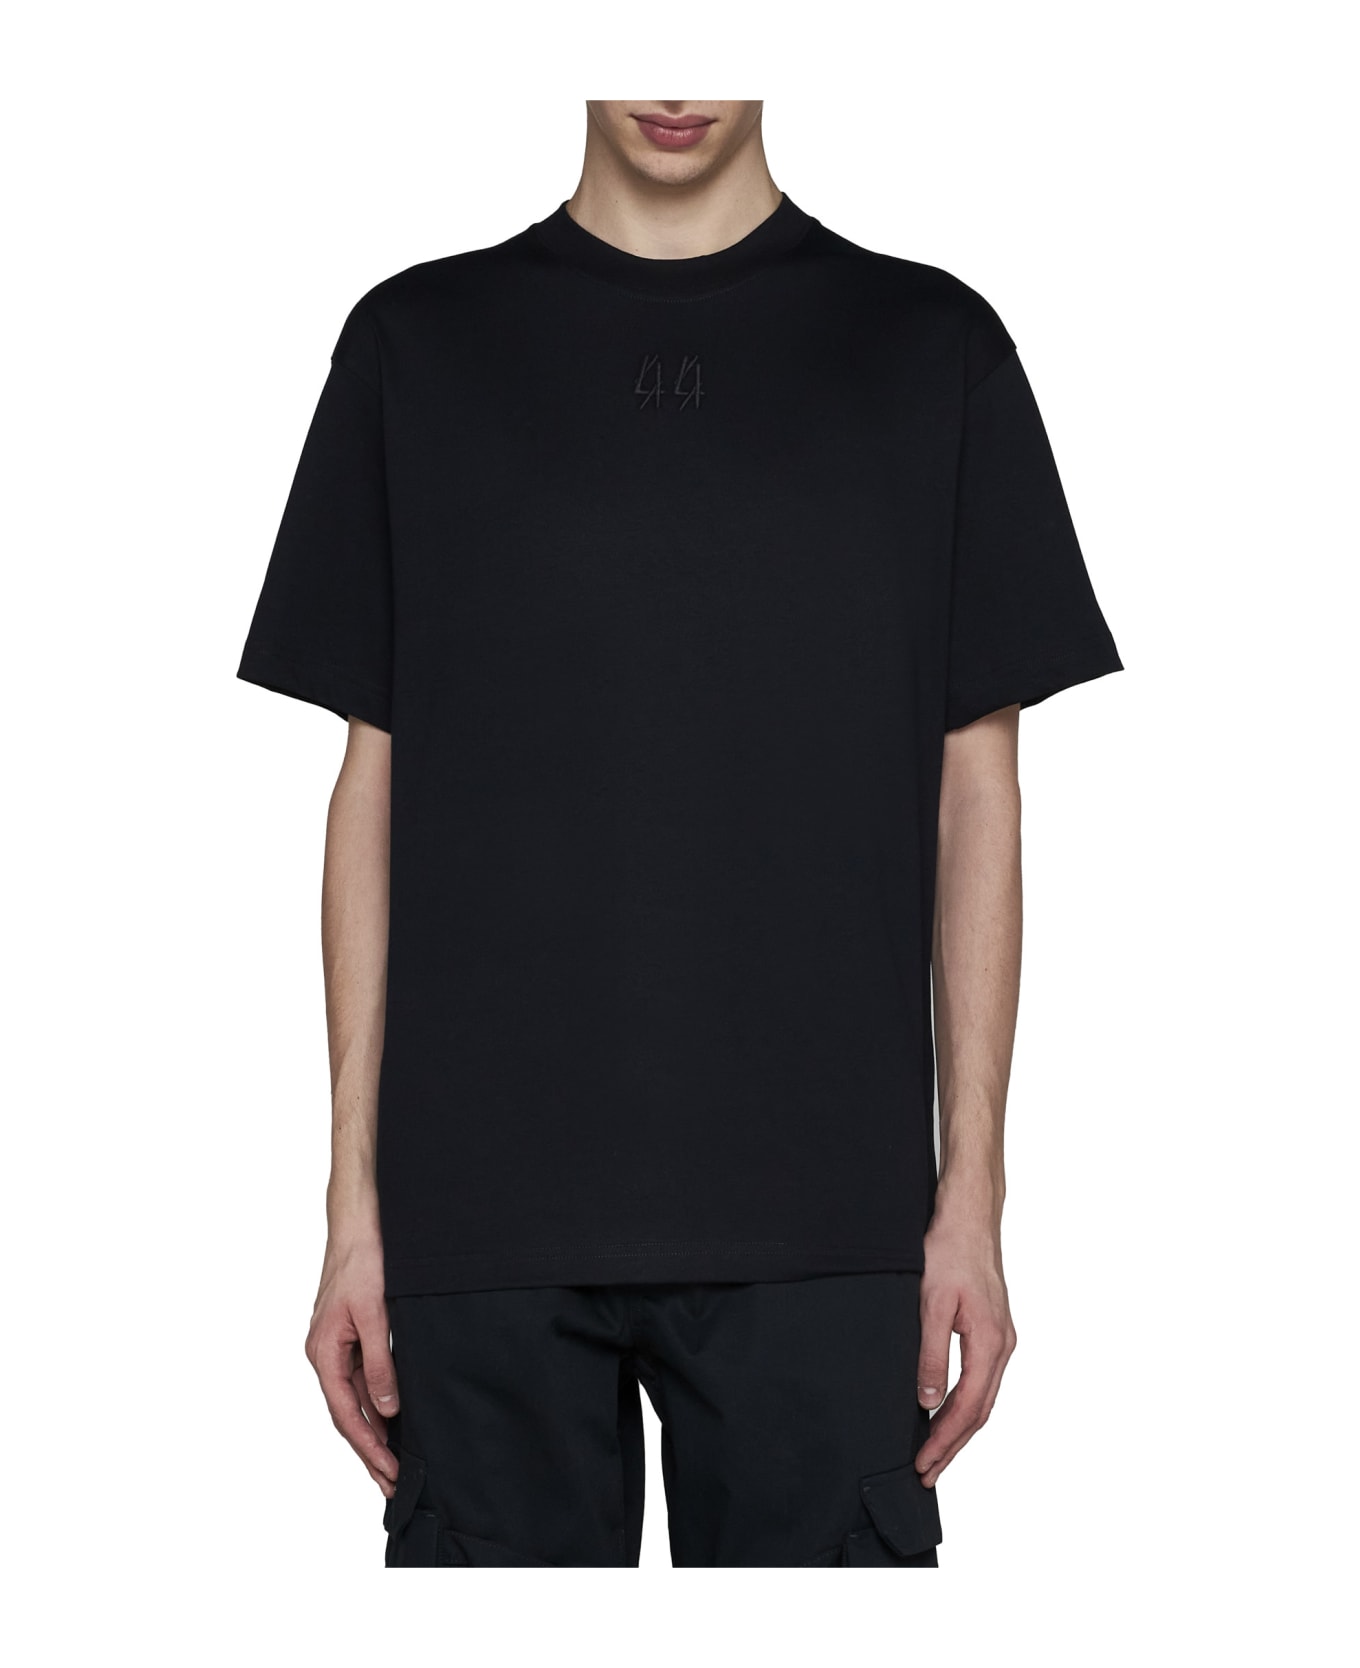 44 Label Group T-Shirt - Black+44 gaffer print シャツ